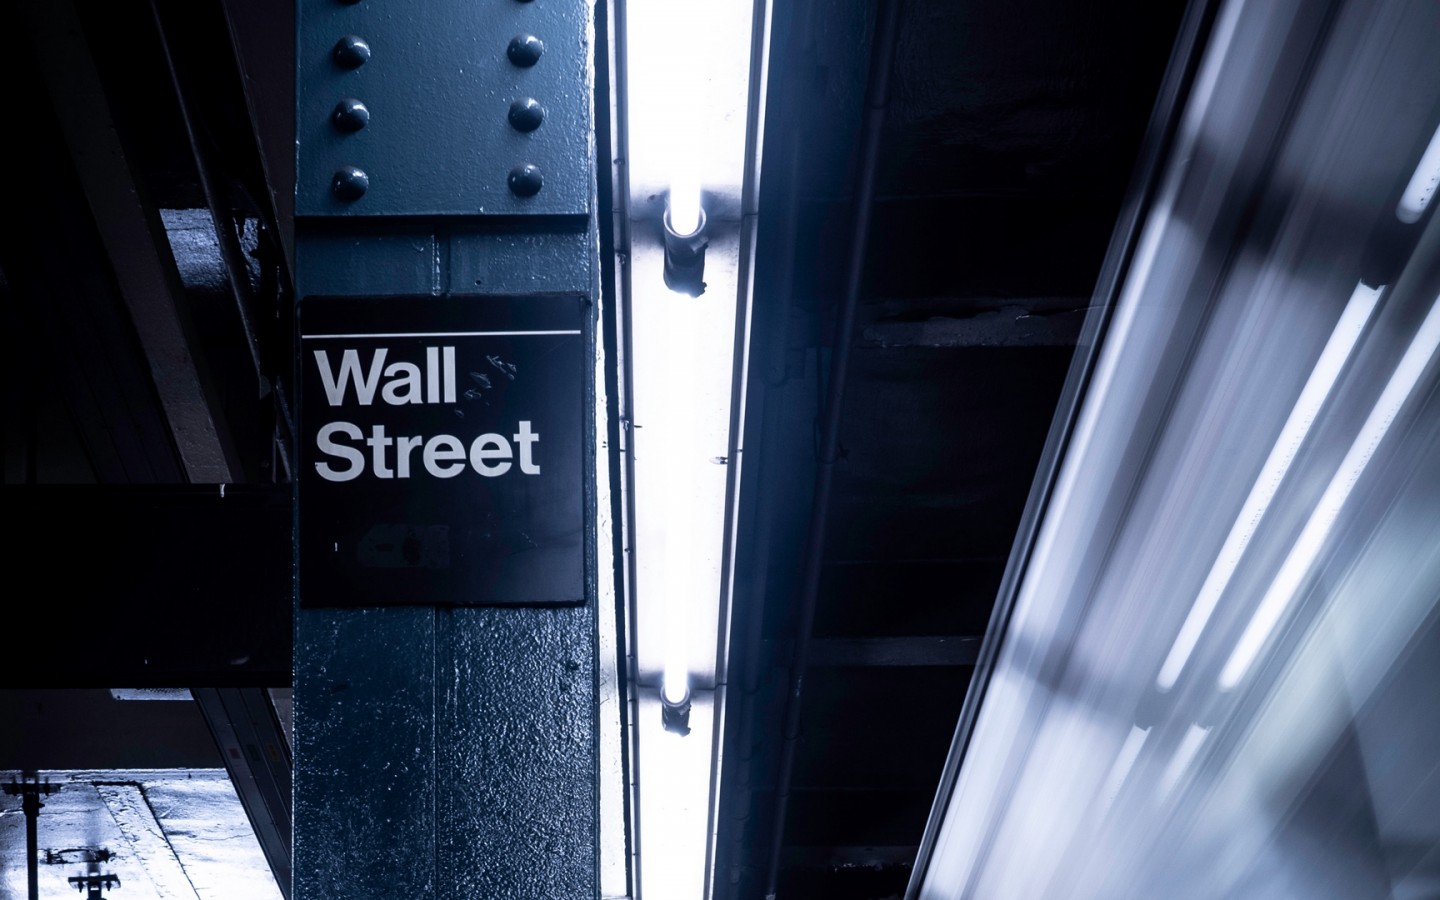 Wall Street underground HD Wallpaper